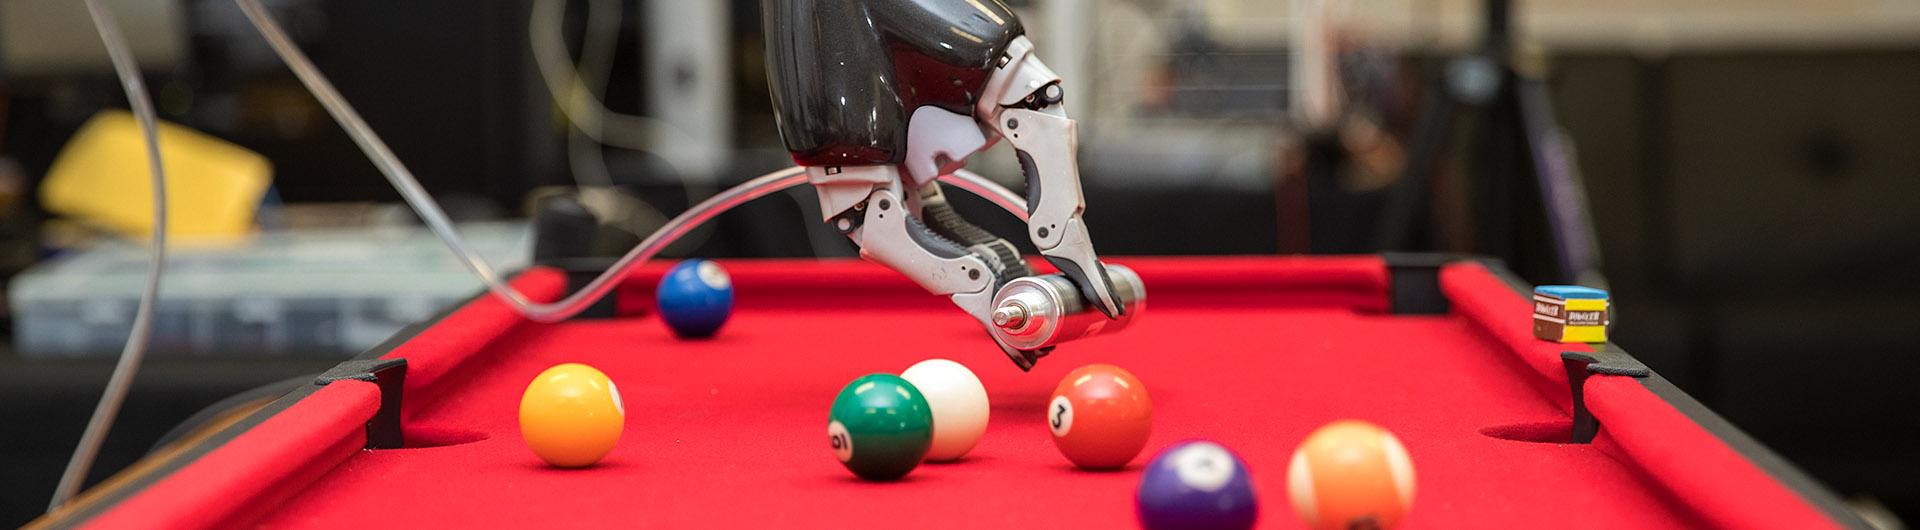 Robotic arm playing pool